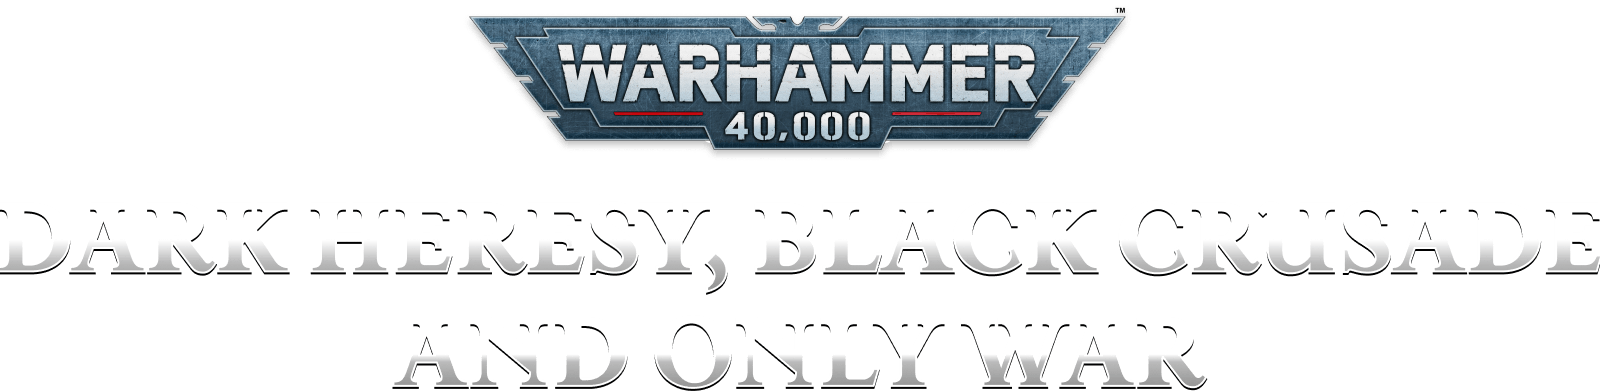 Humble RPG Bundle: Warhammer 40k: Dark Heresy, Black Crusade and Only War by Cubicle 7 Games